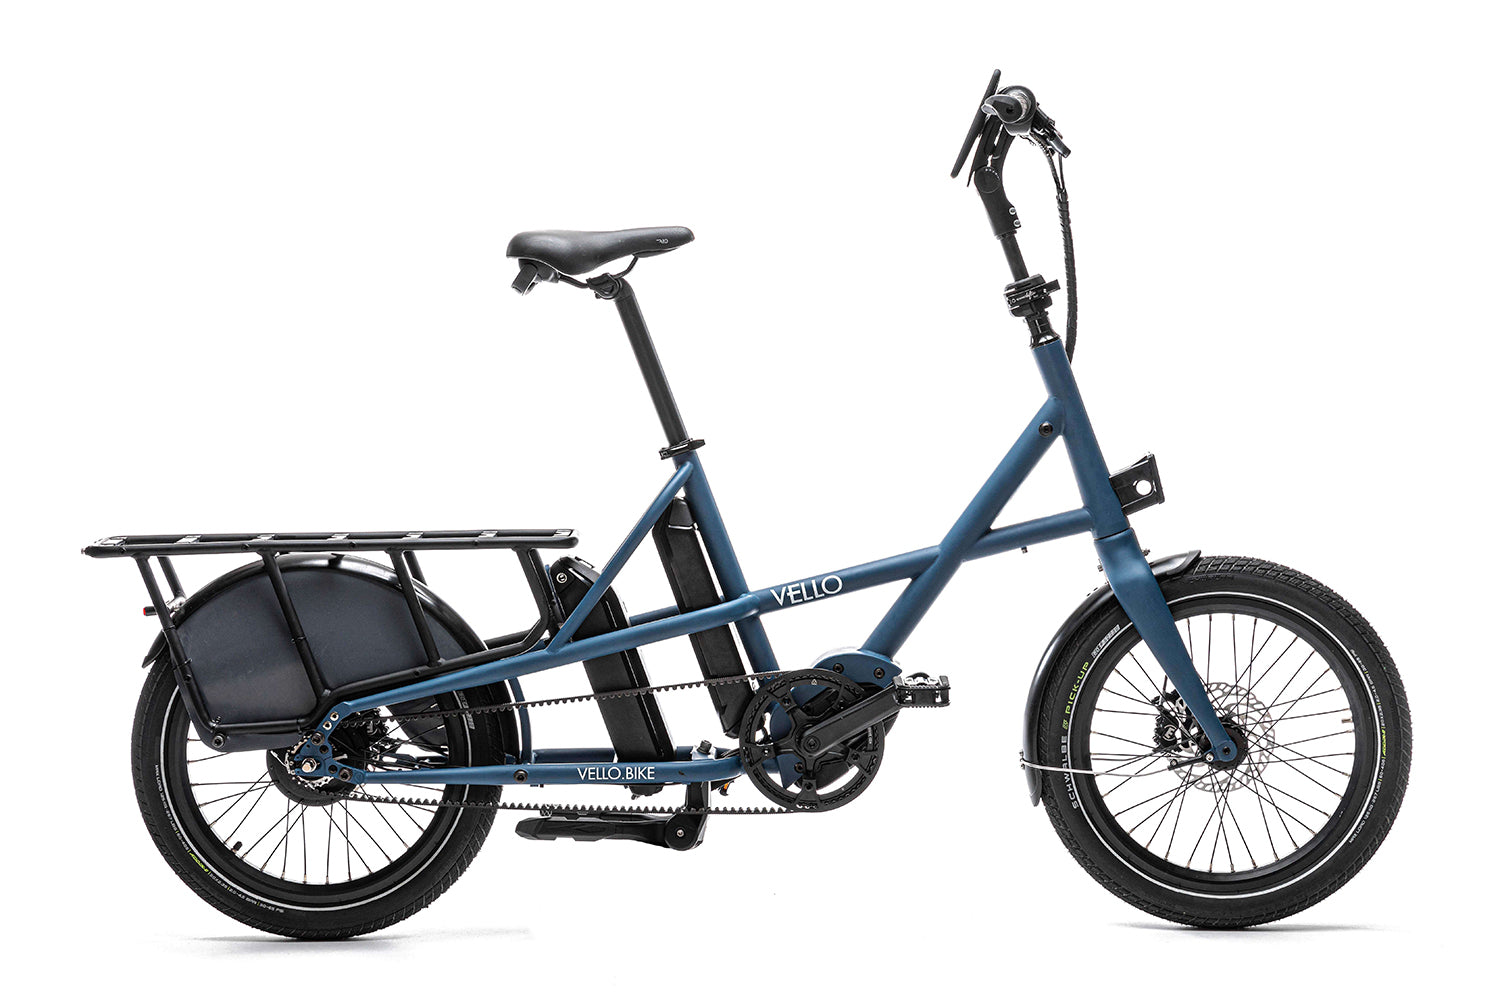 VELLO SUB - The lightest e-cargo bike ever built.